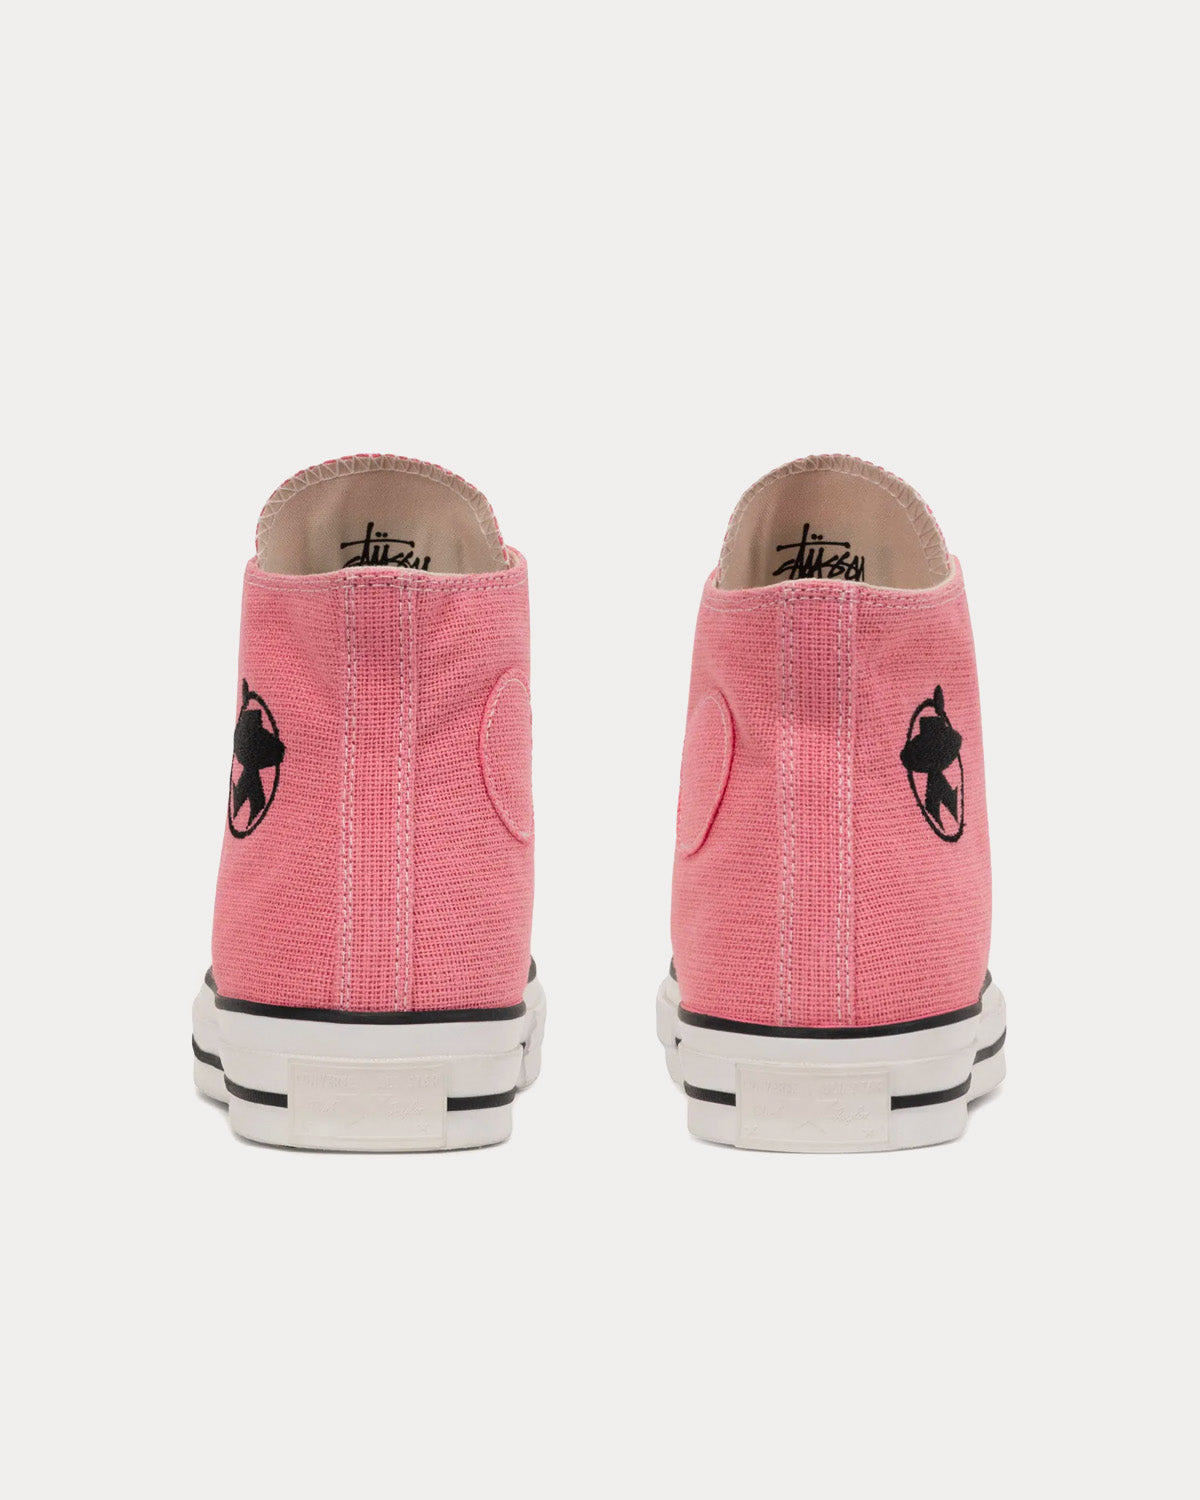 Converse x Stüssy - Chuck 70 Hi Pink High Top Sneakers